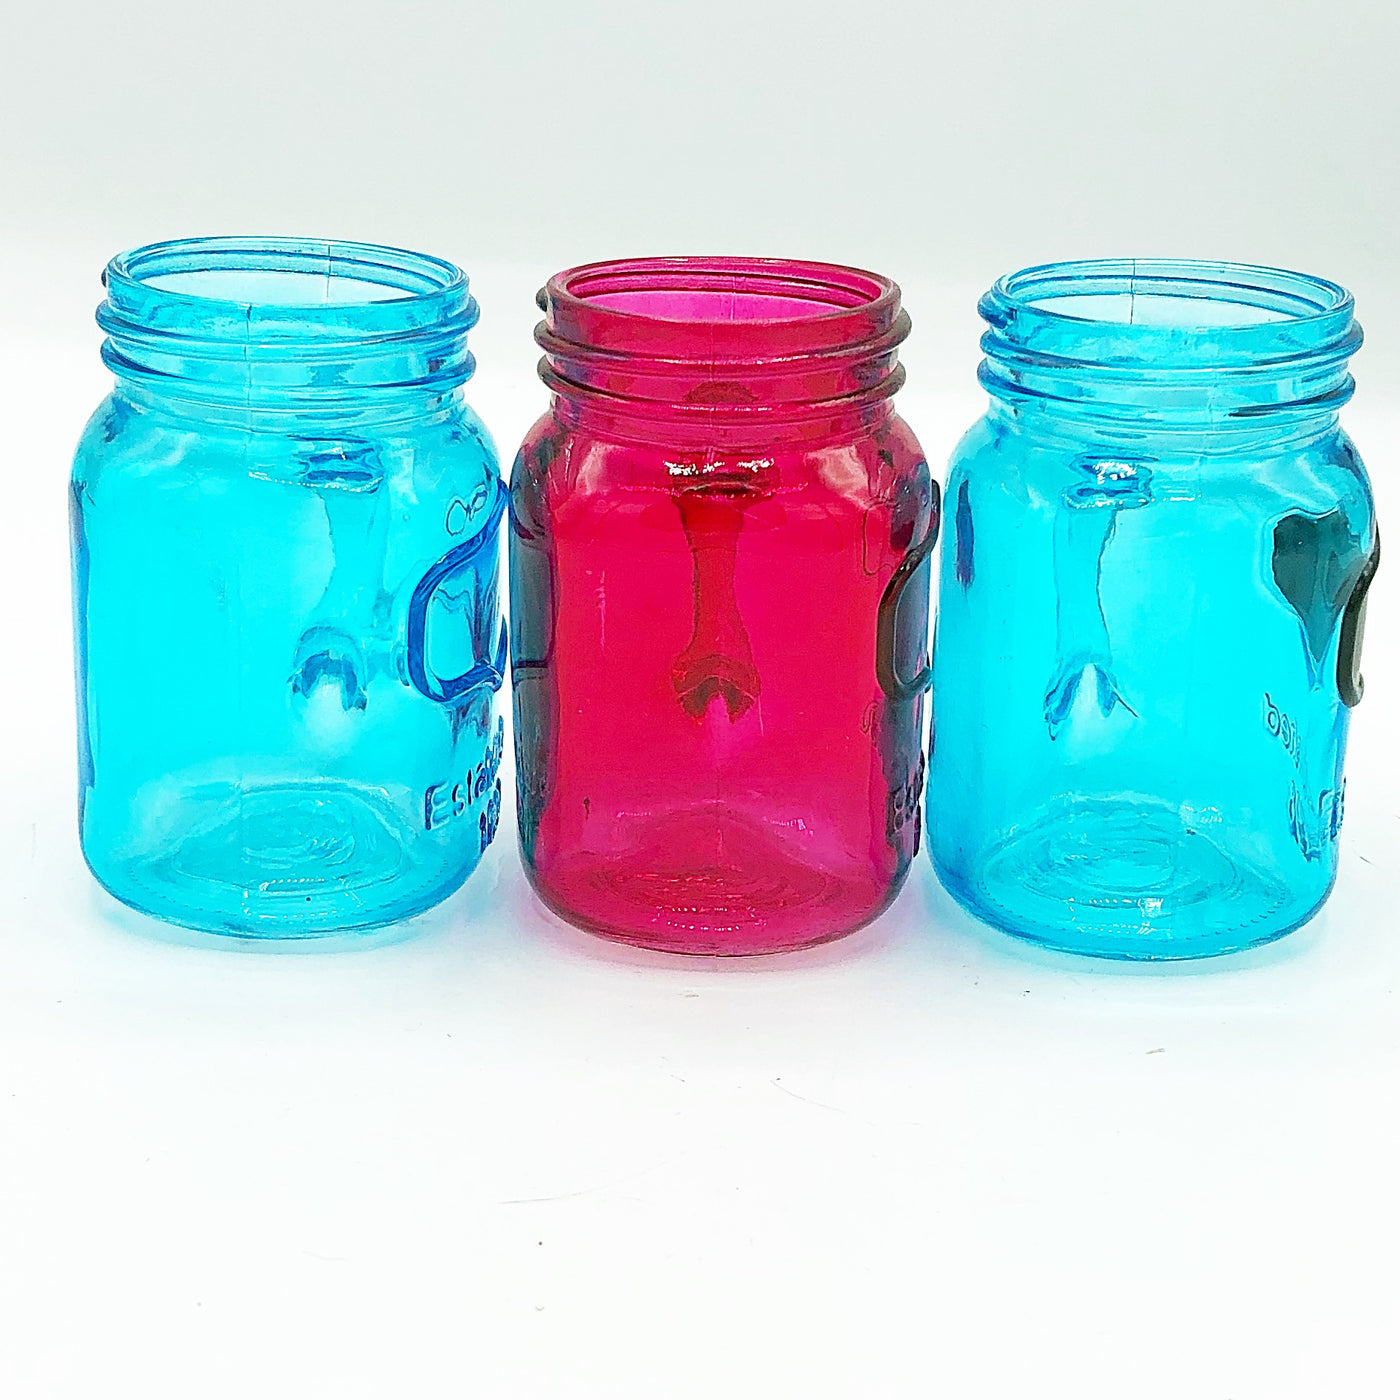 Set of 3 Mini Mason Jars 5 oz Pink and Blue